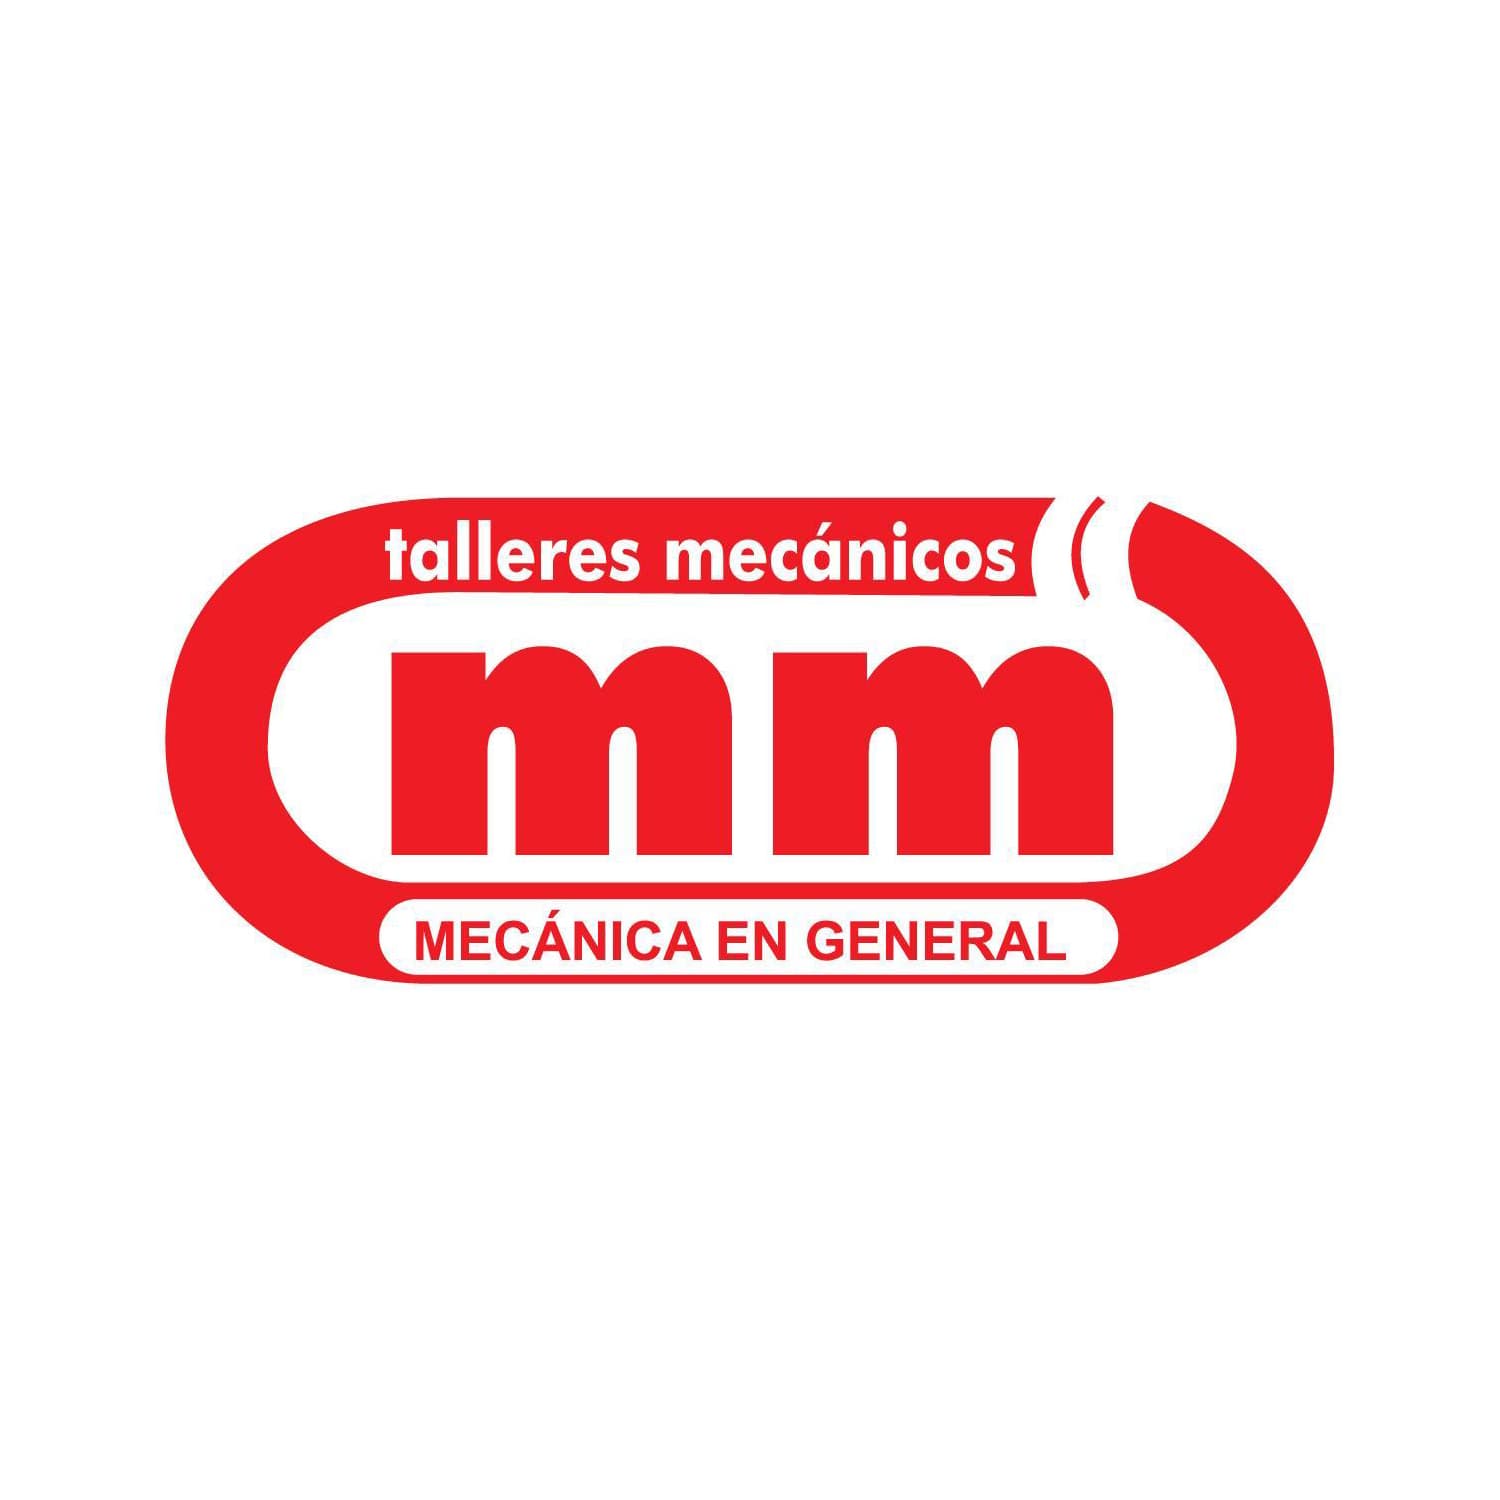 Taller mecánico y multimarca - Talleres Mecánicos MM